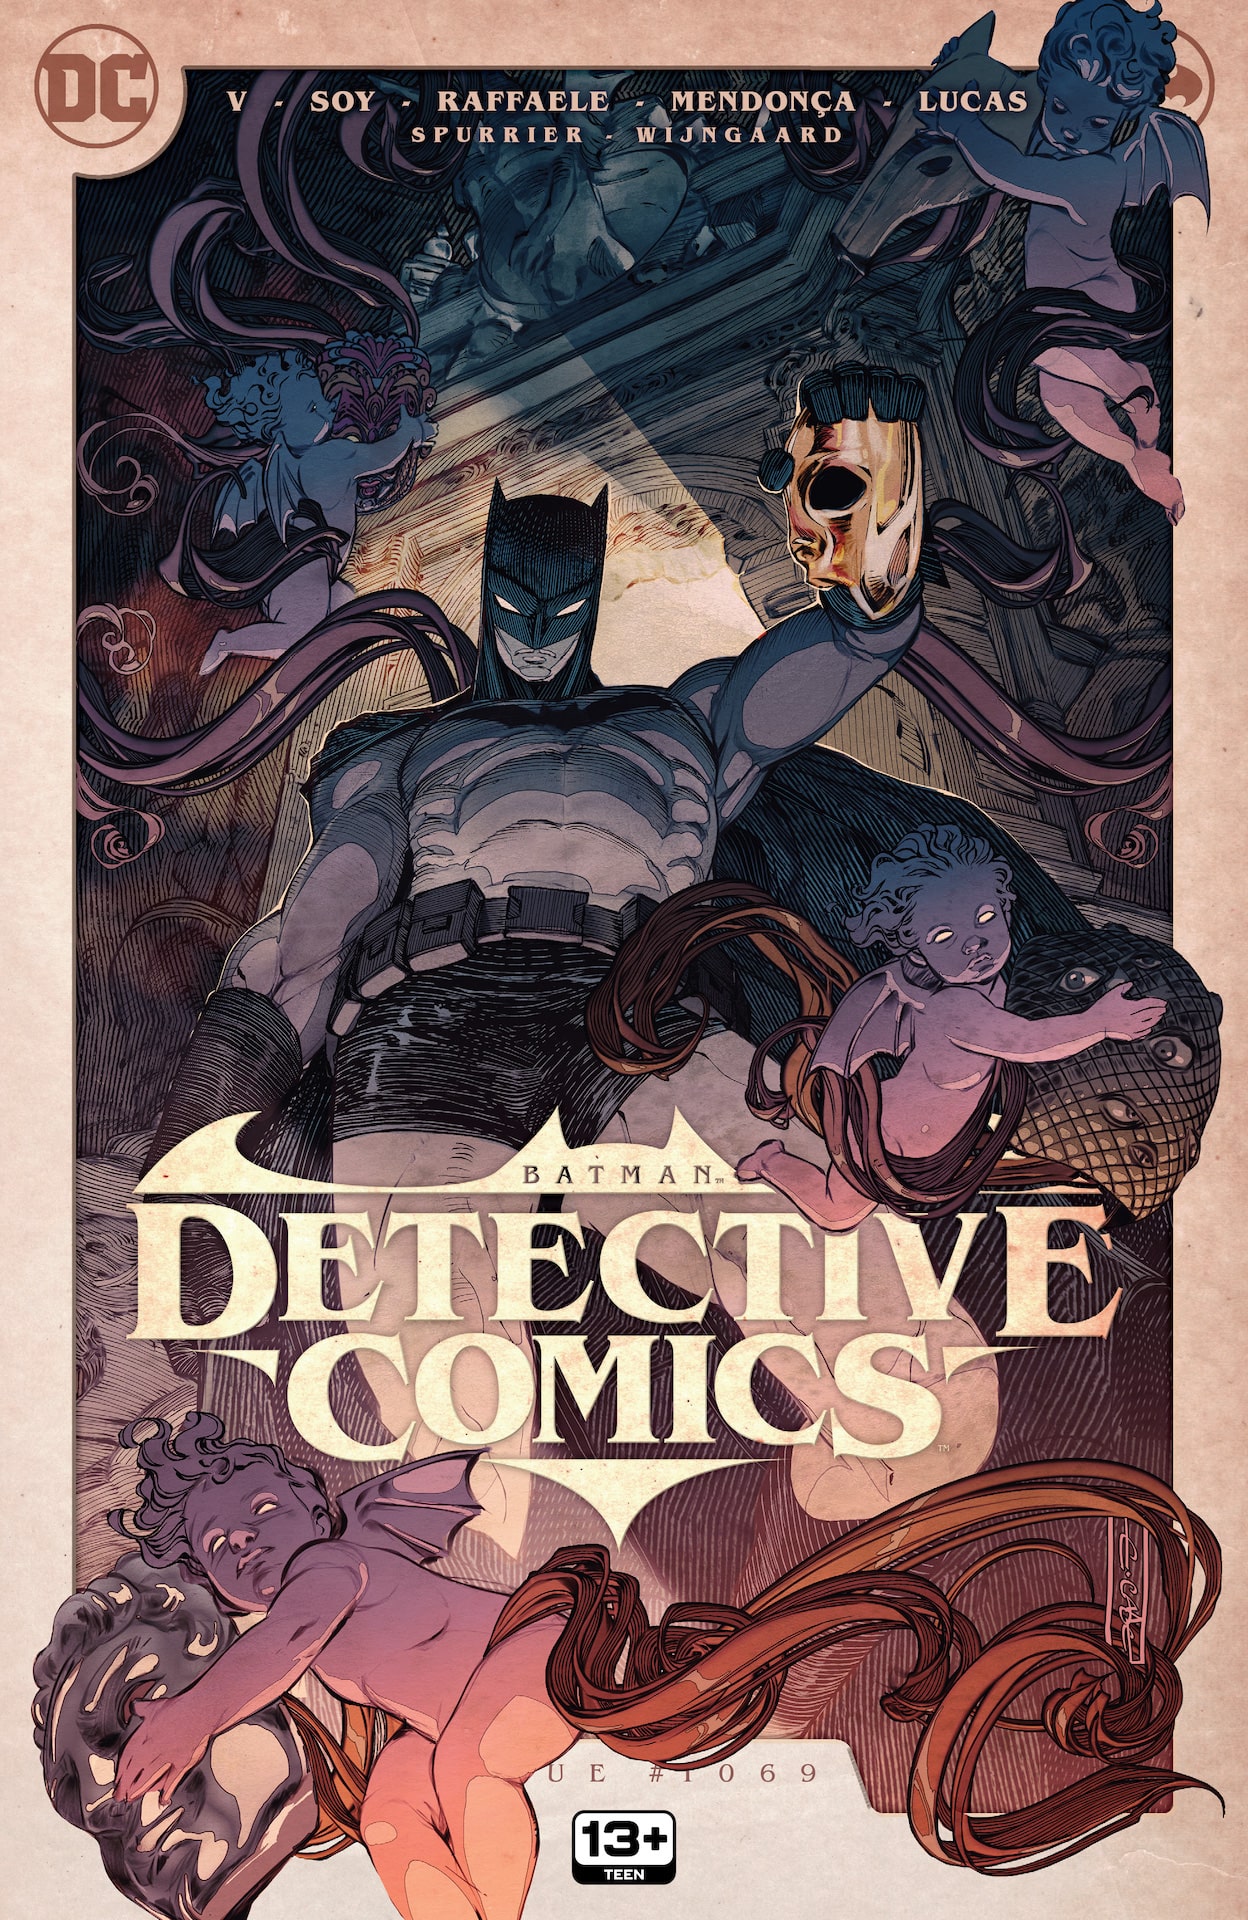 DC Preview: Detective Comics #1069